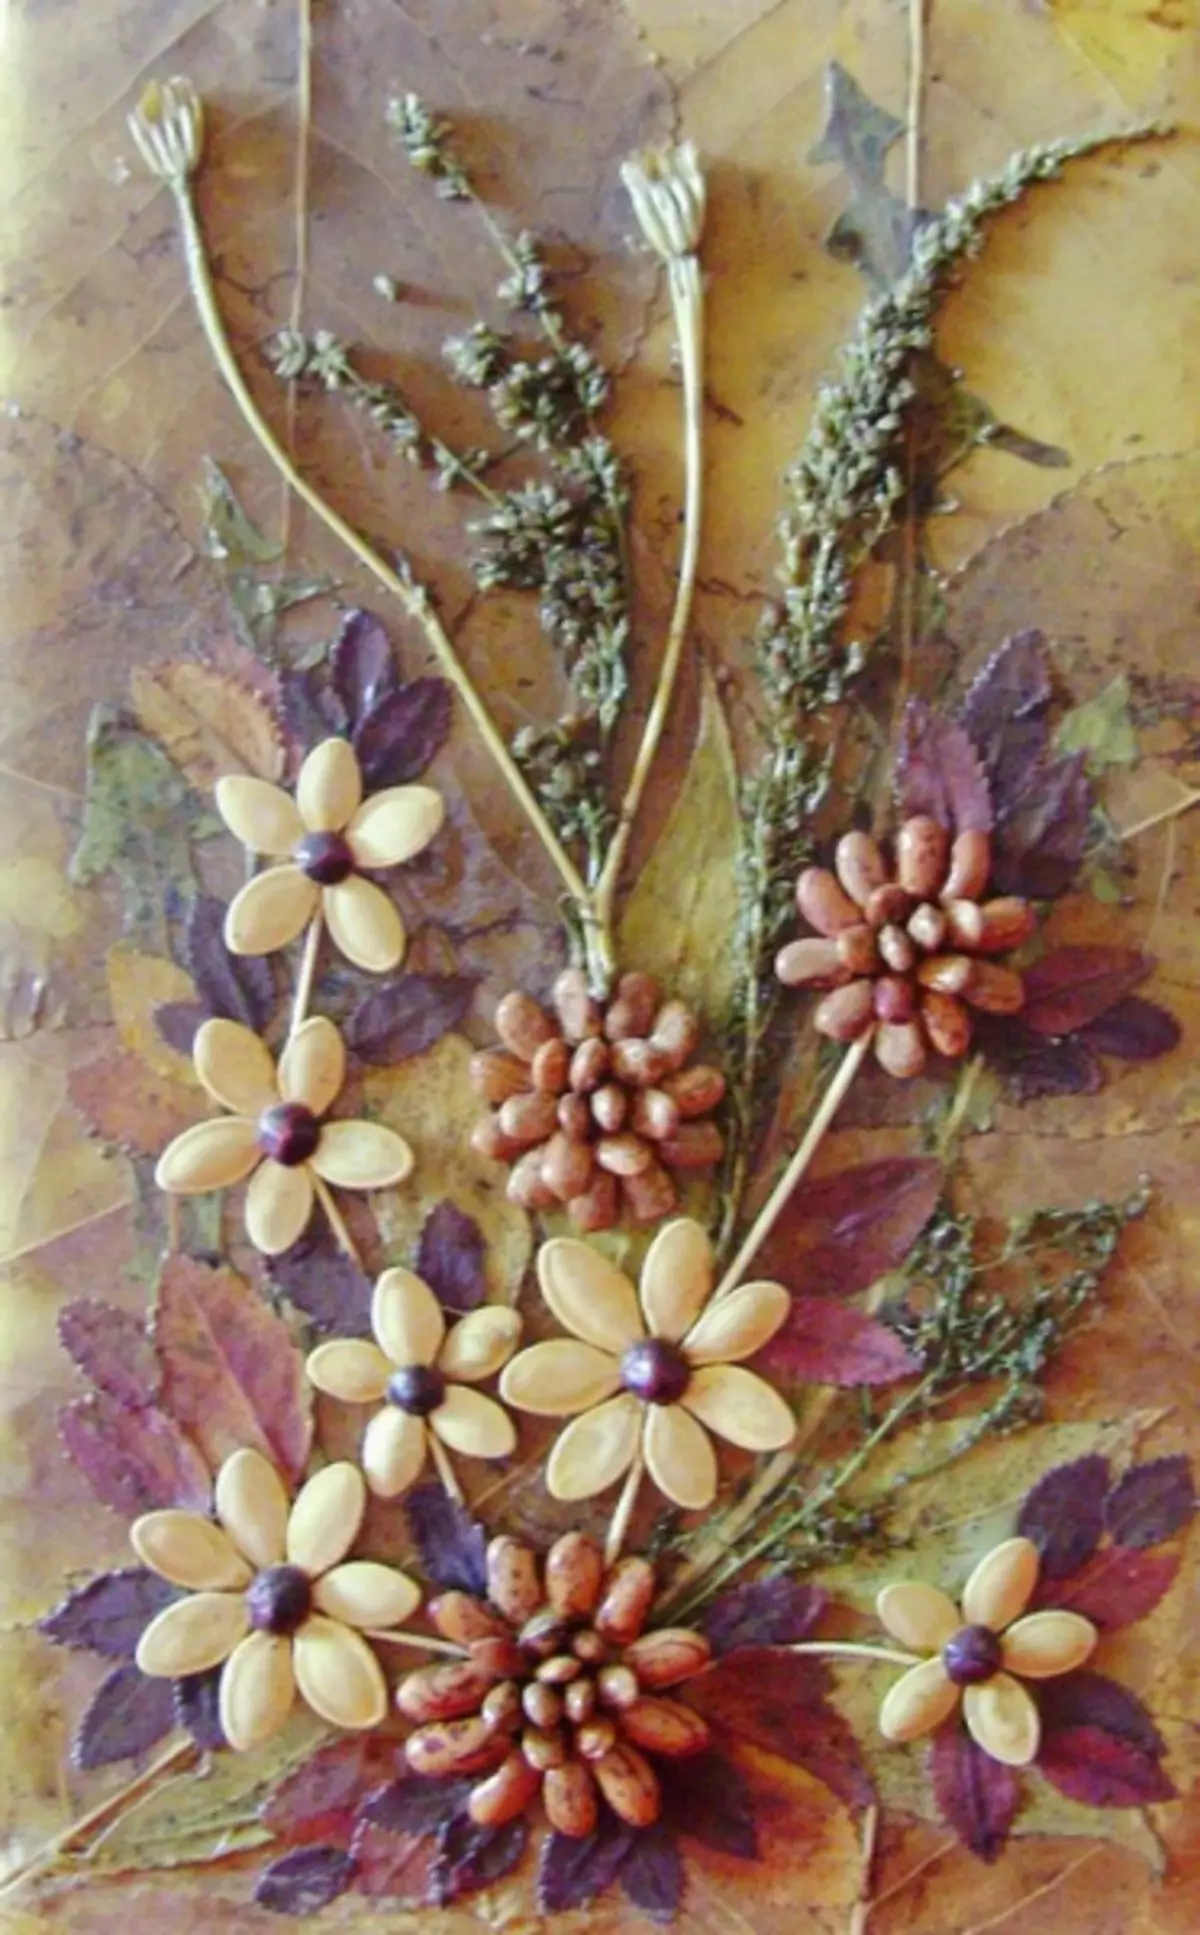 Idéias para artesanato de outono: pinturas de materiais naturais